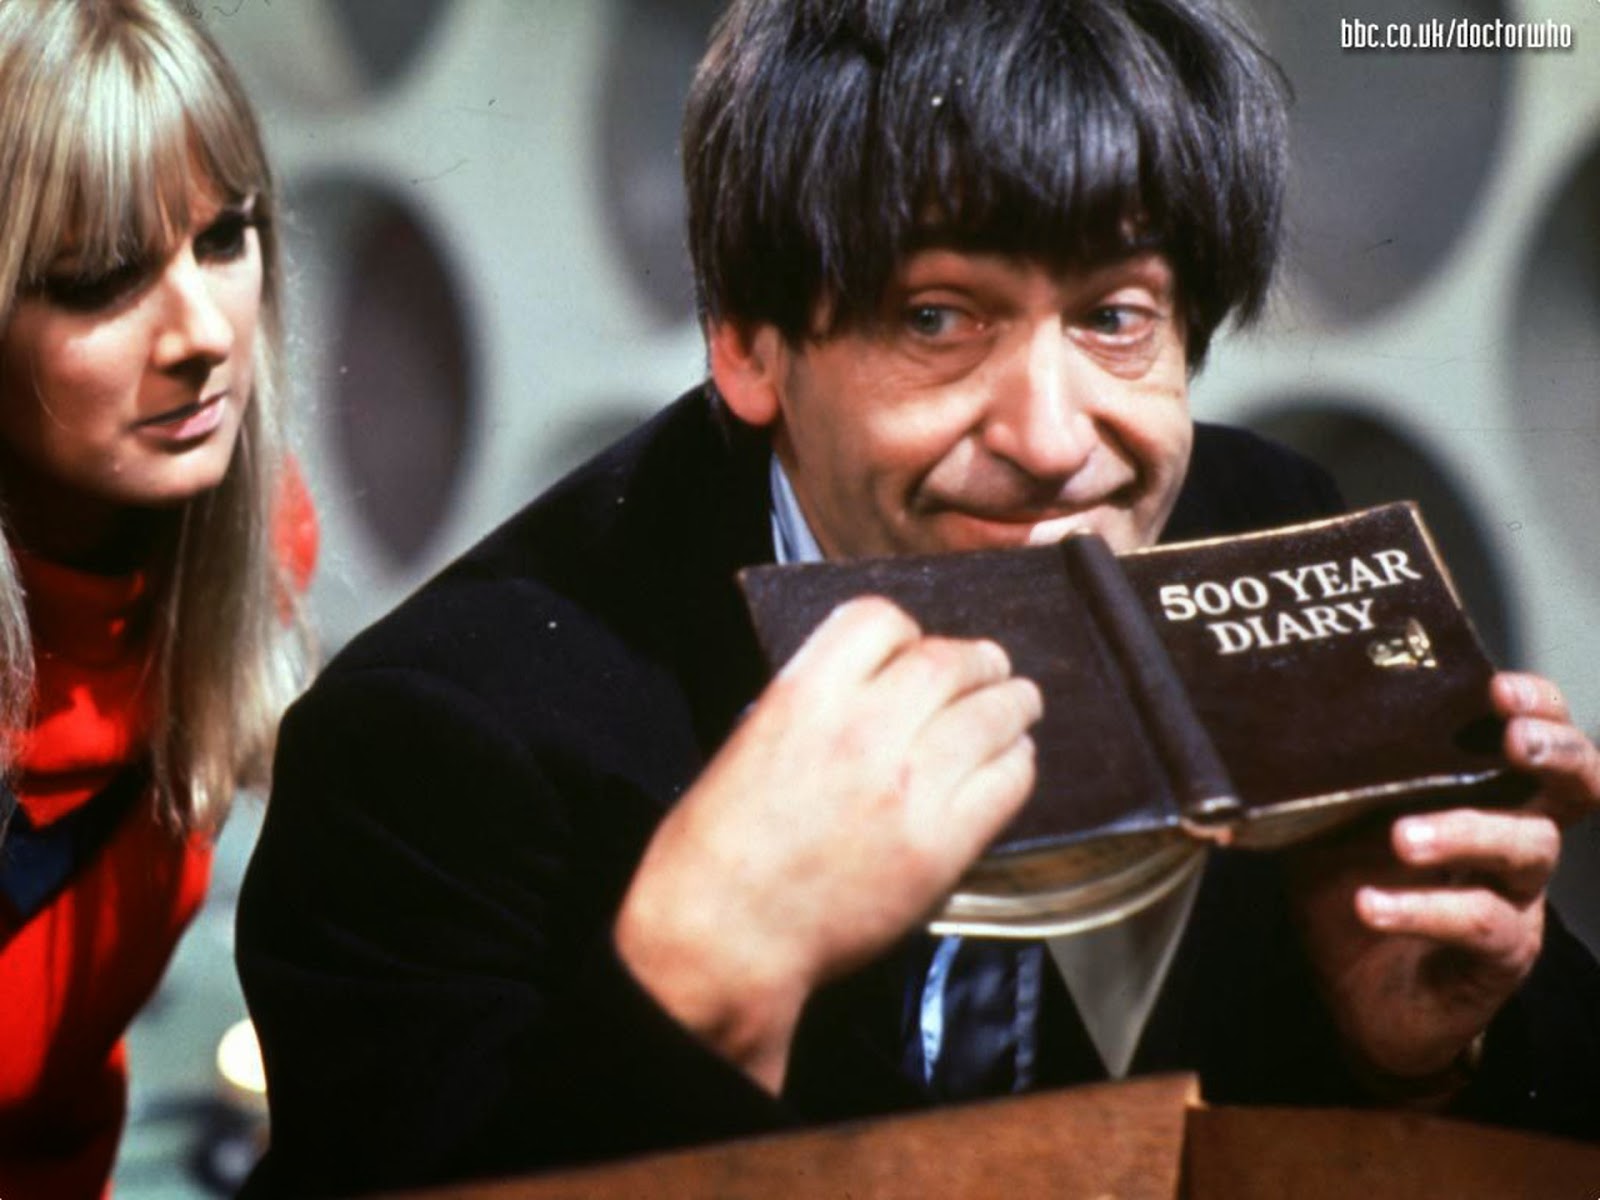 BIF BANG POW BBC Doctor Who 500 Year Mini-Diary 